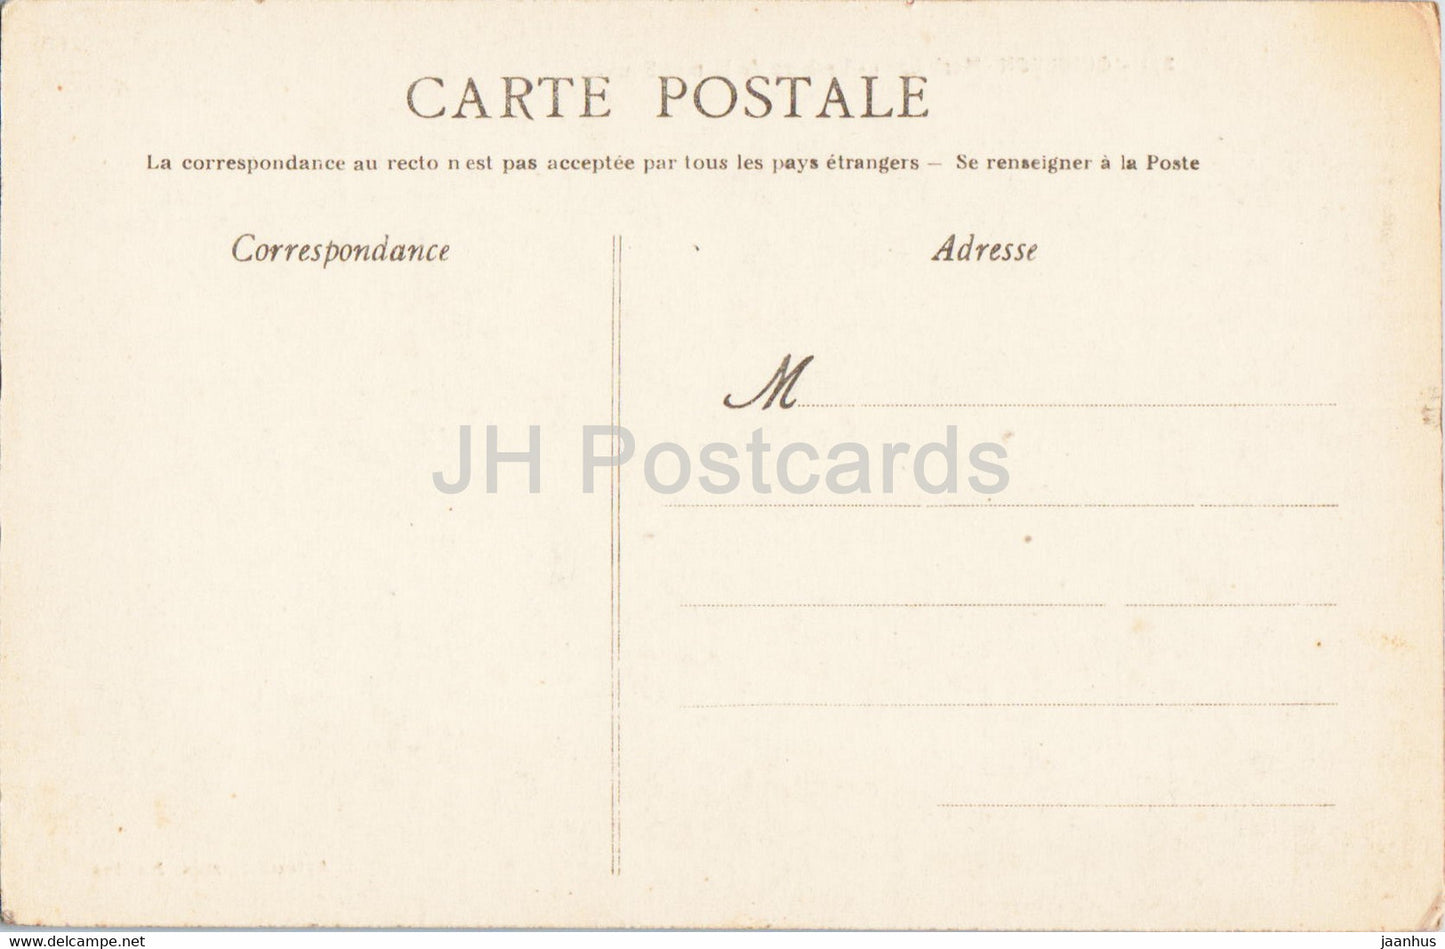 Quiberon - Rochers de la mer Sauvage - 231 - alte Postkarte - Frankreich - unbenutzt